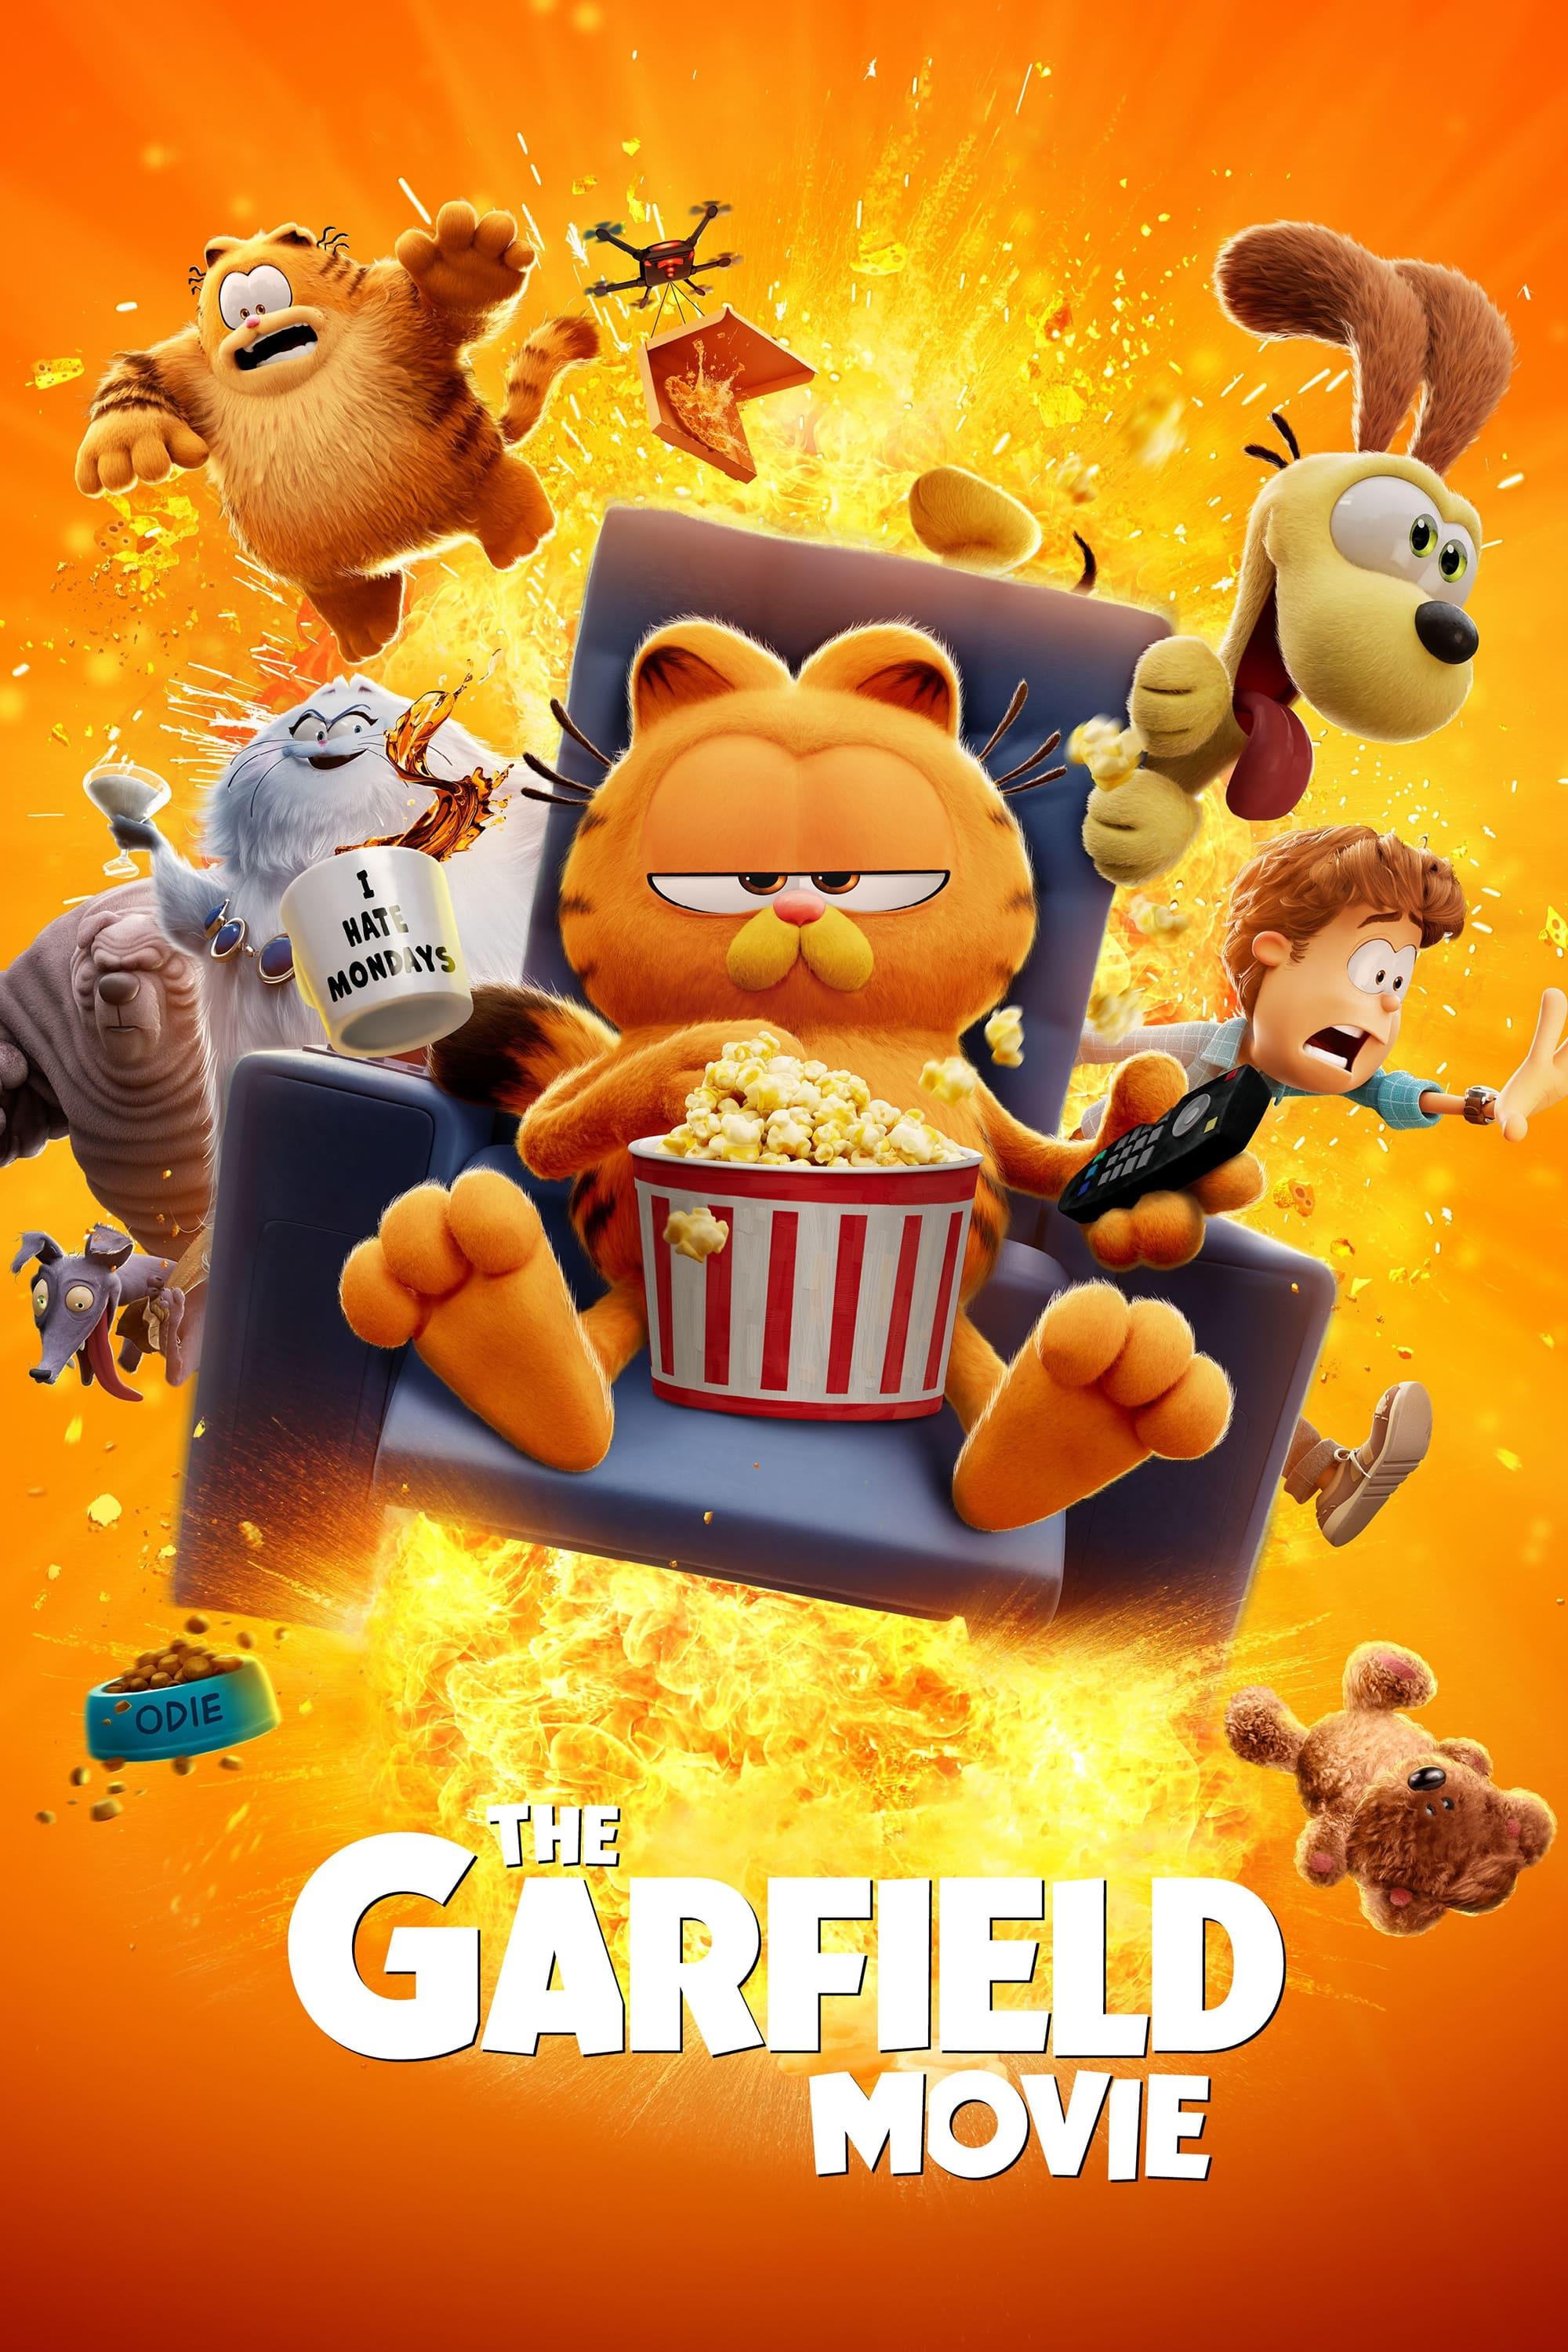 Movie poster of "The Garfield Movie"